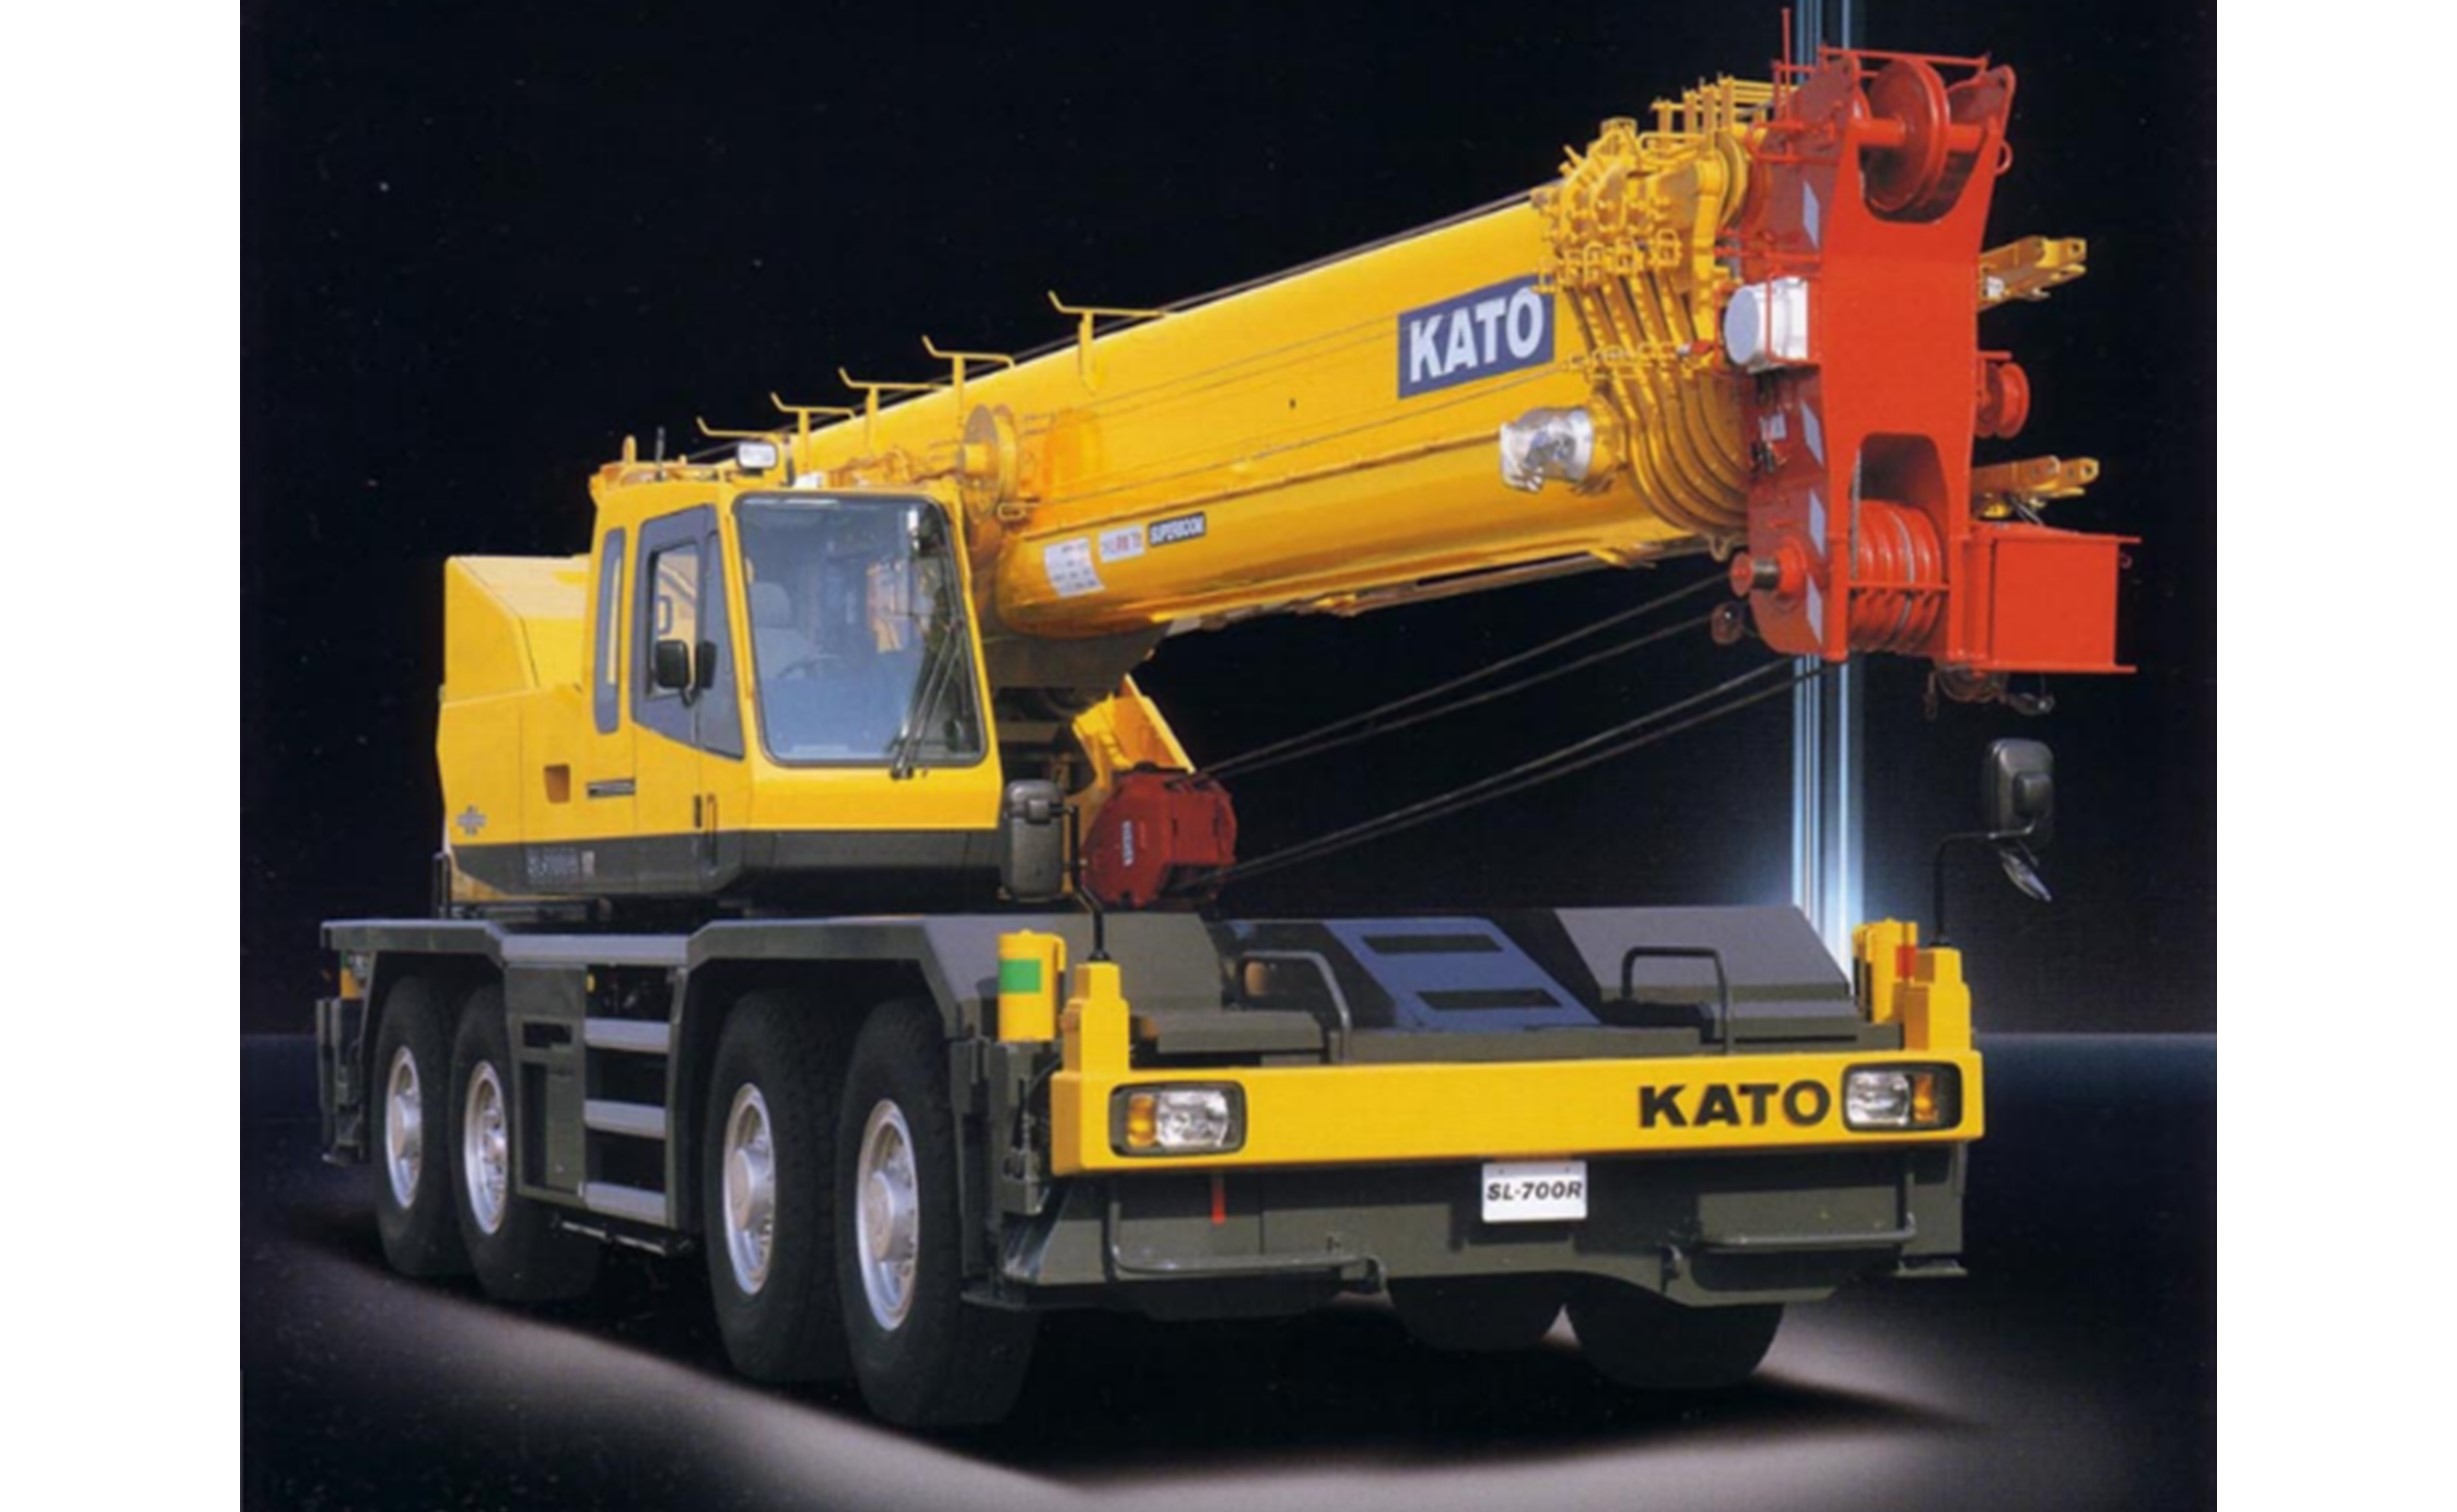 Kato Rough Terrain Crane Model: SL700R